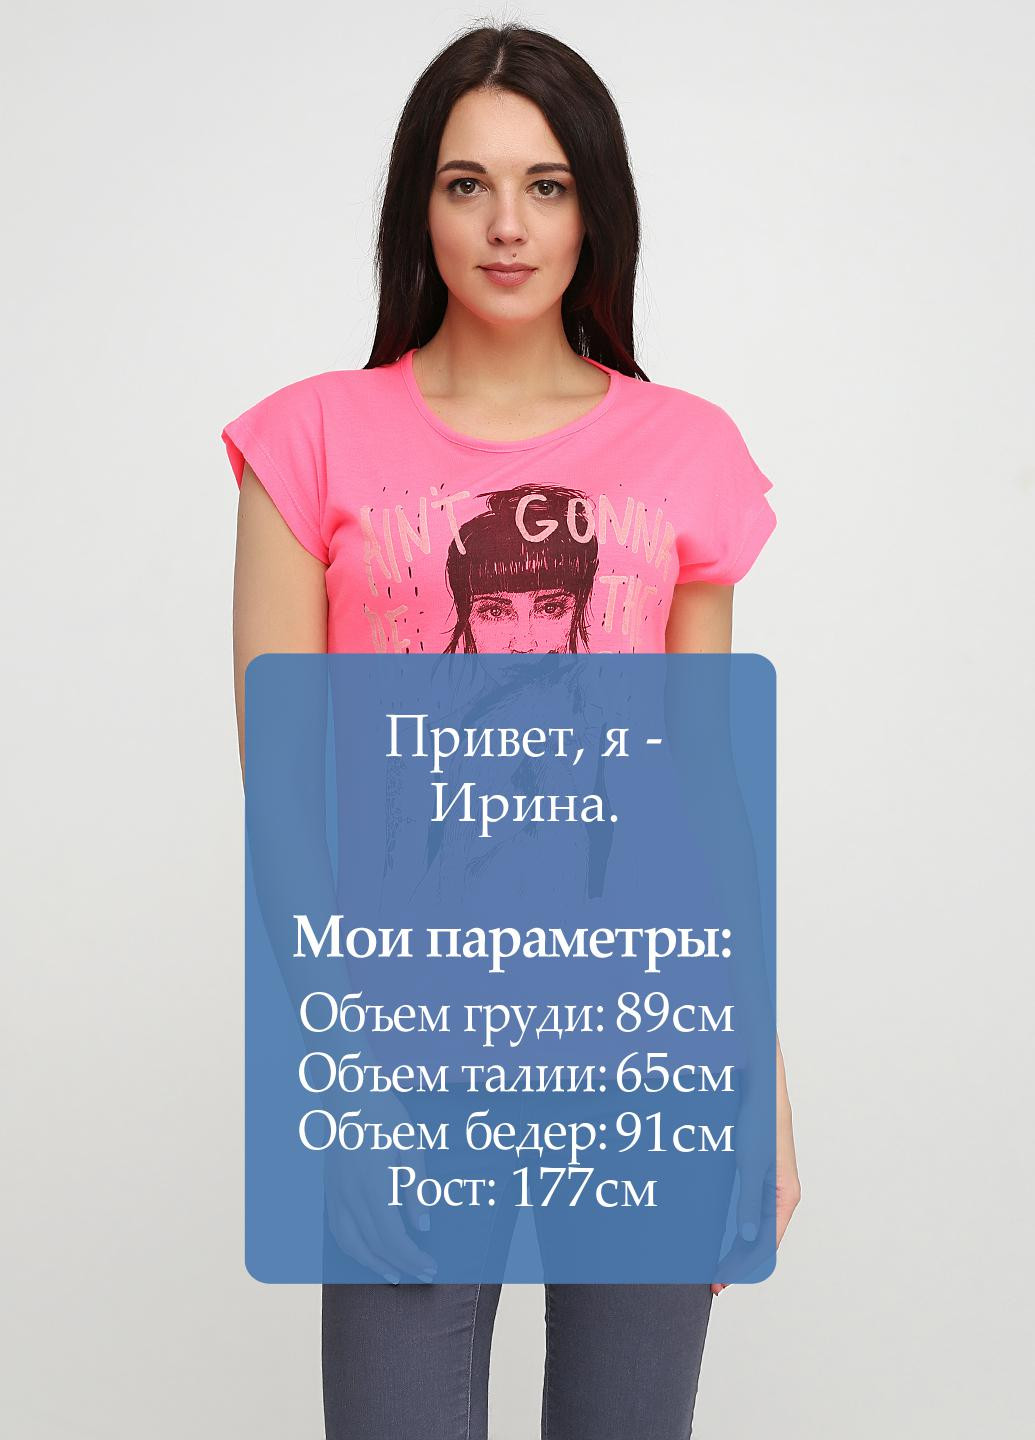 Кислотно-розовая летняя футболка SEZ 10